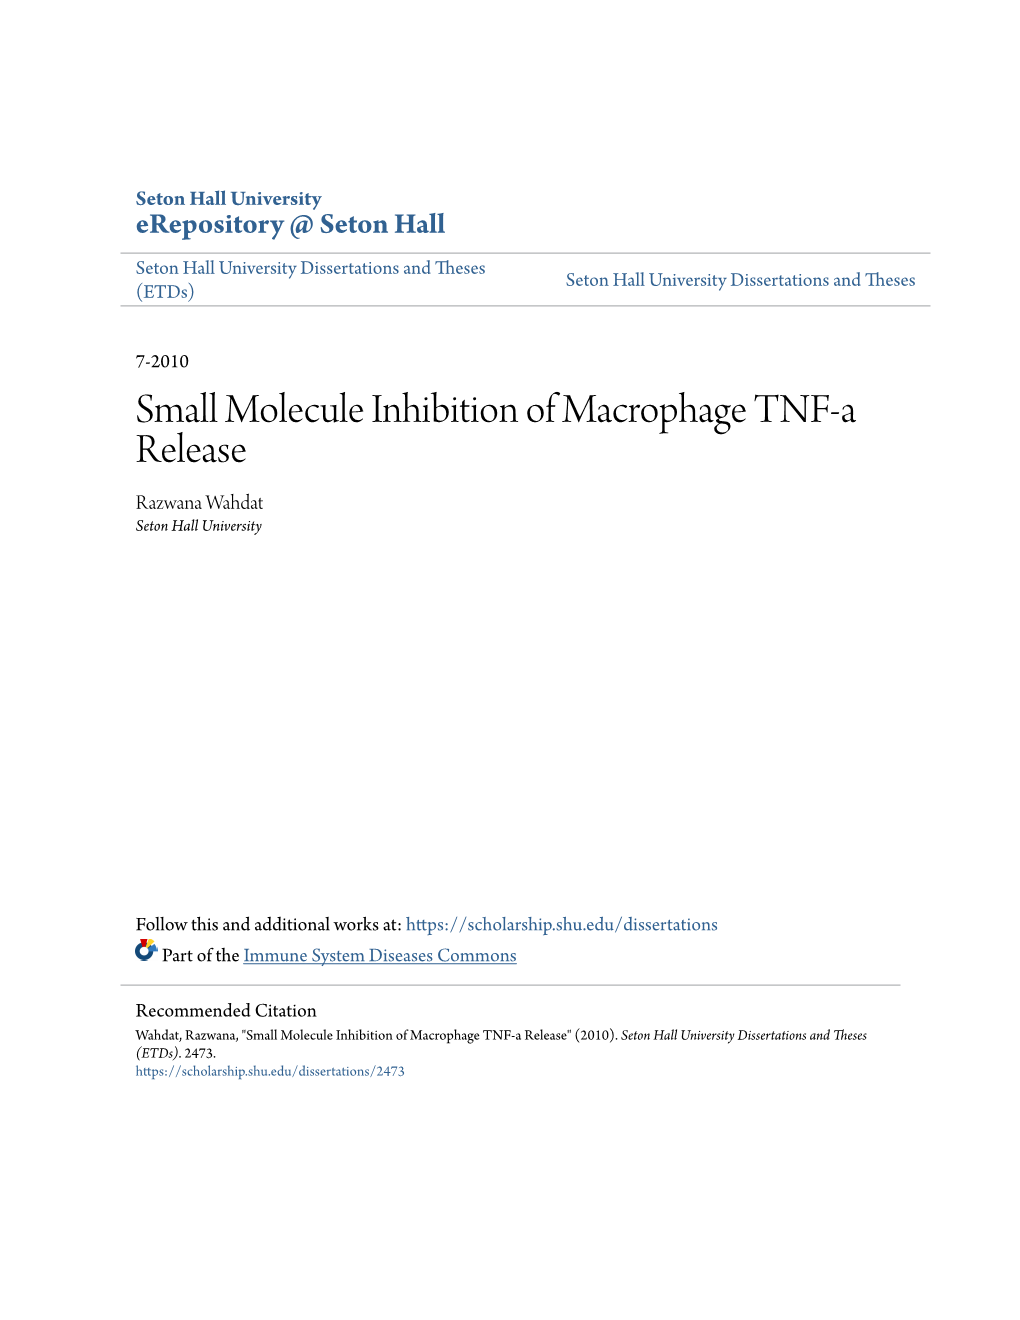 Small Molecule Inhibition of Macrophage TNF-A Release Razwana Wahdat Seton Hall University